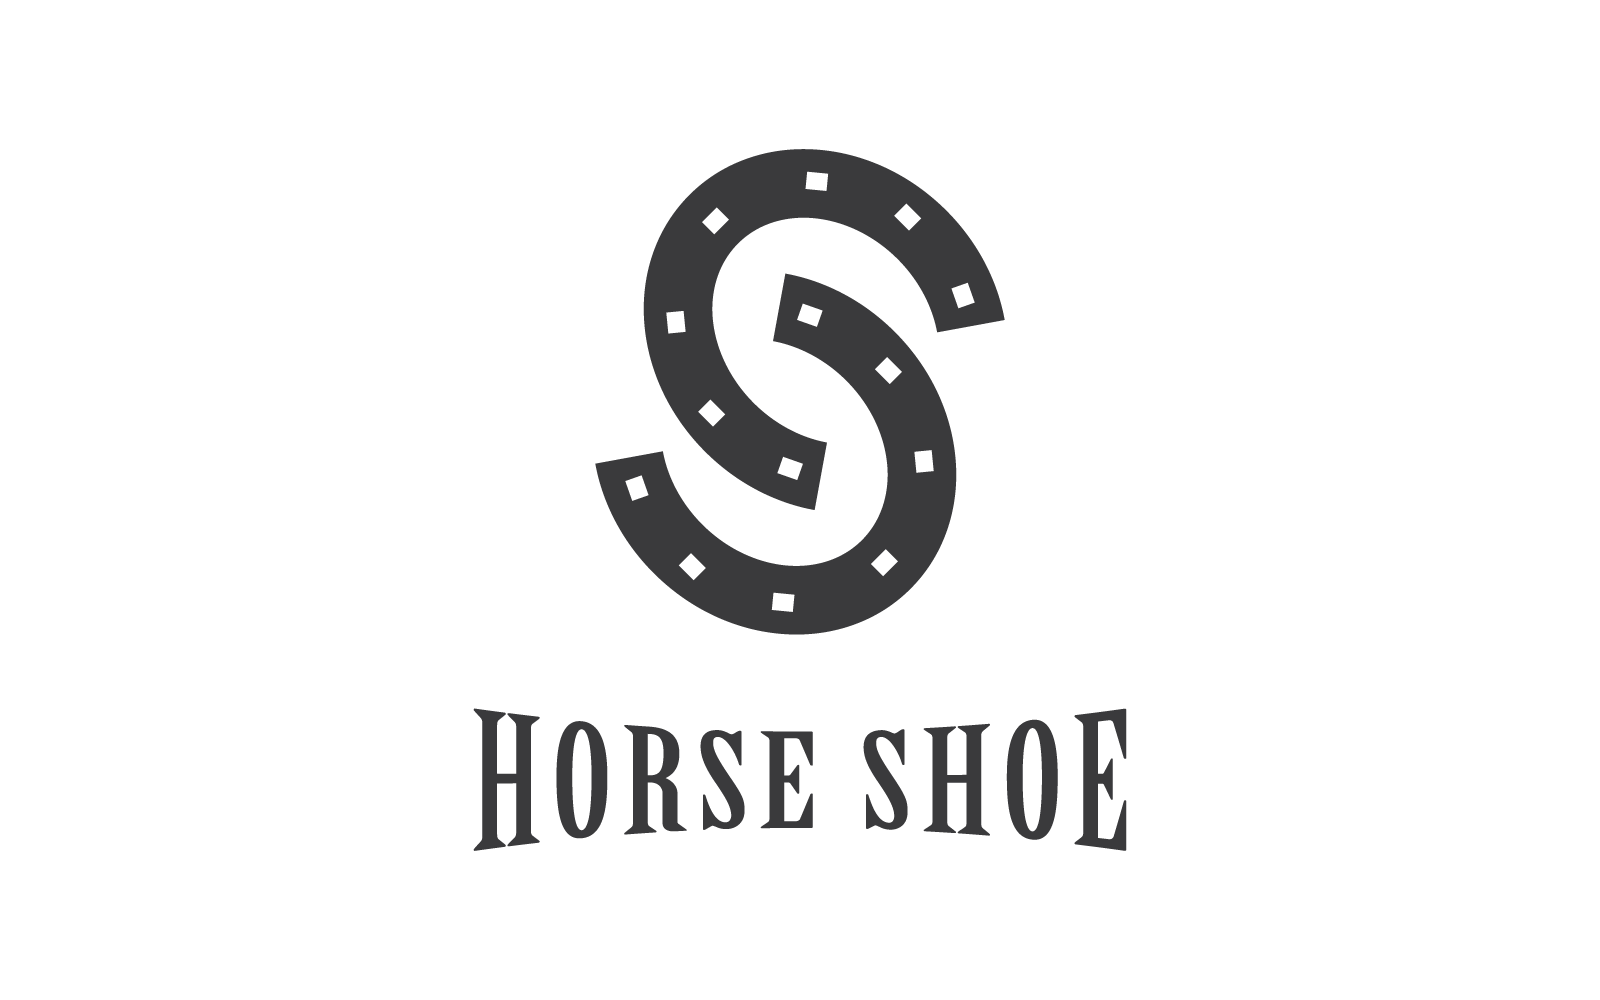 Horseshoe logo icon vector illustration template